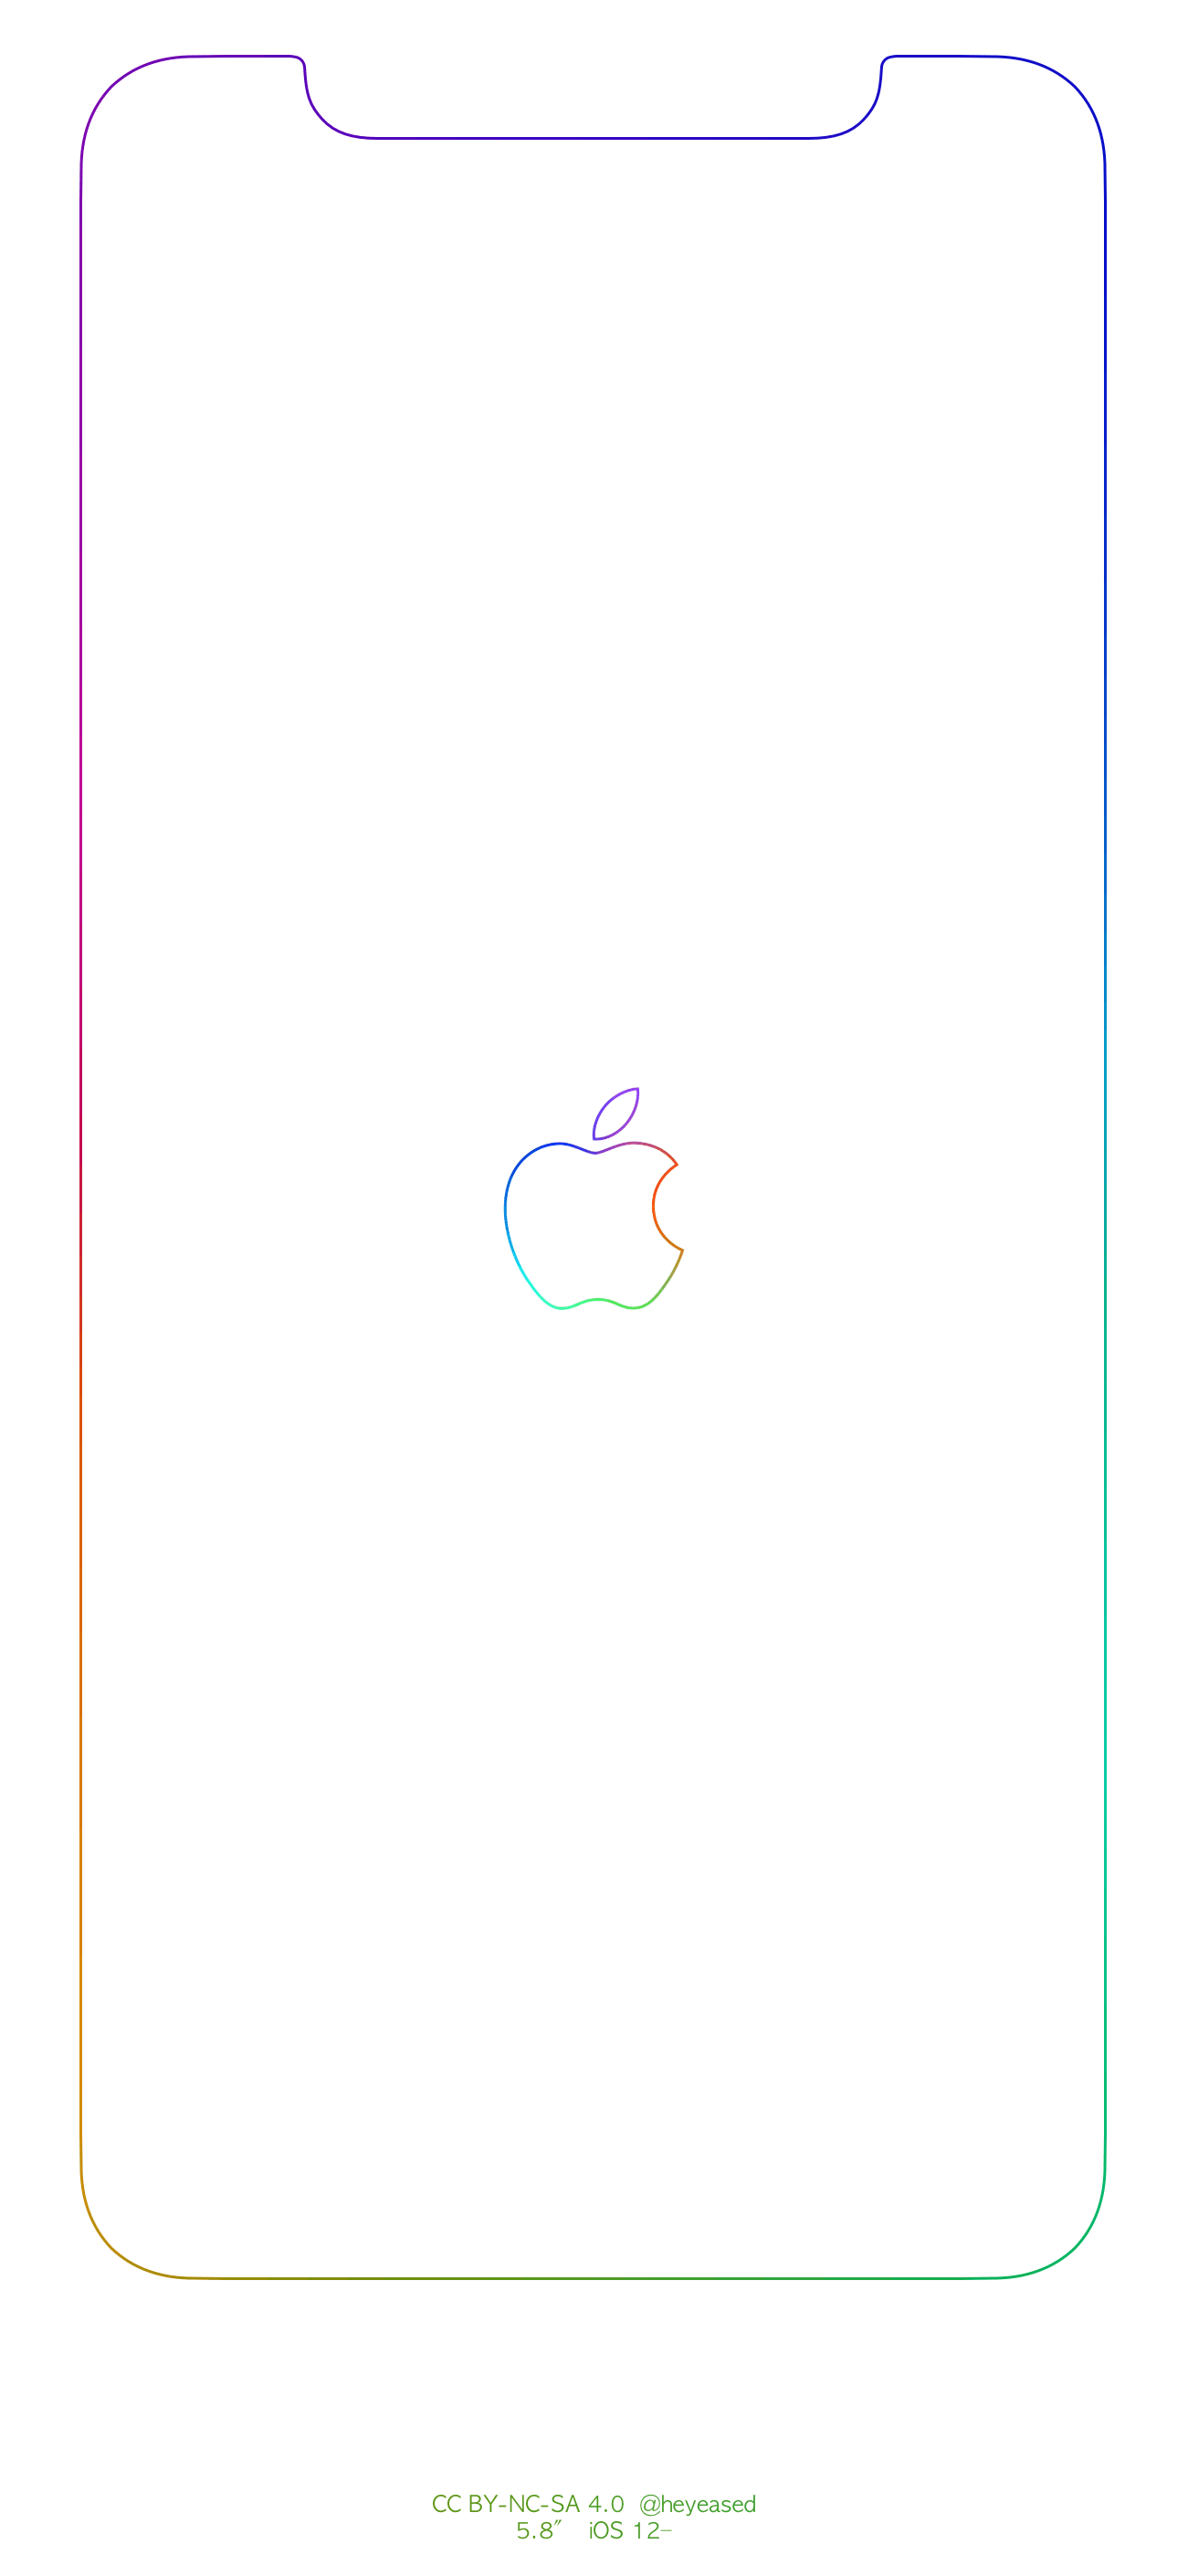 Rainbow border & apple logo iPhone wallpaper Imgur links: iphone